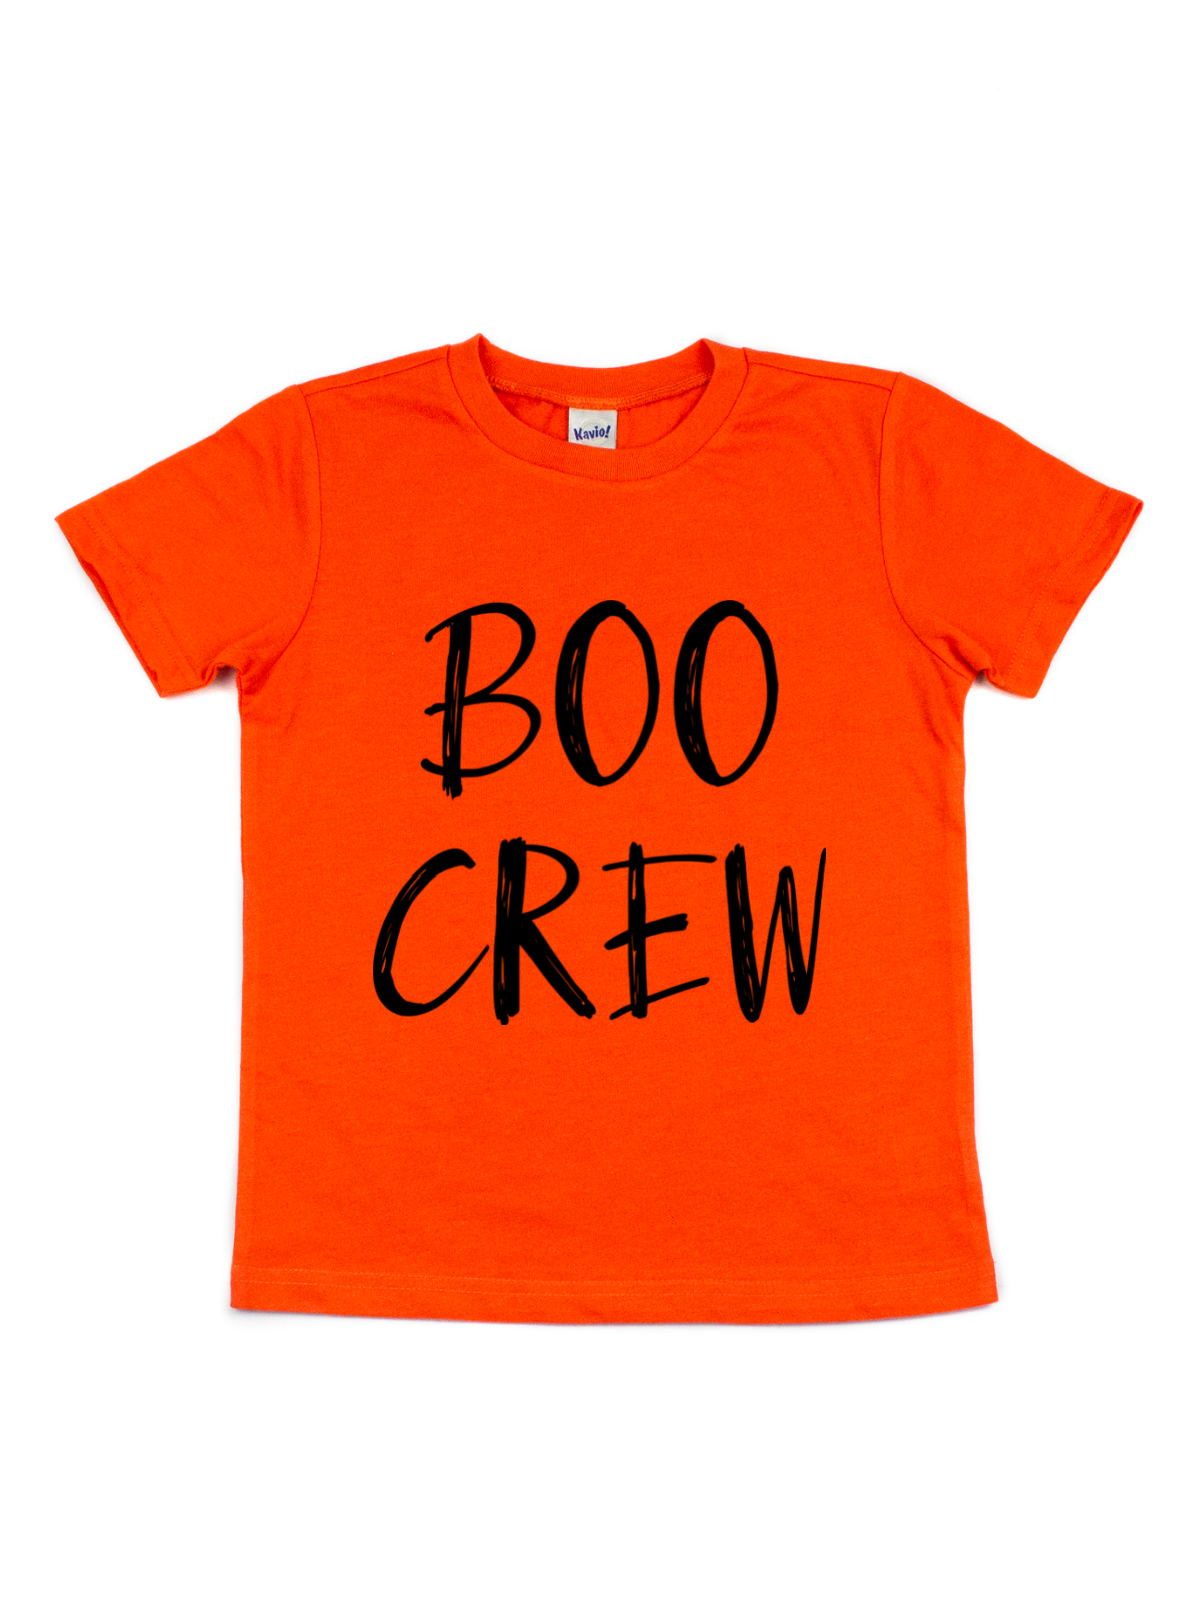 boo crew kids orange shirt